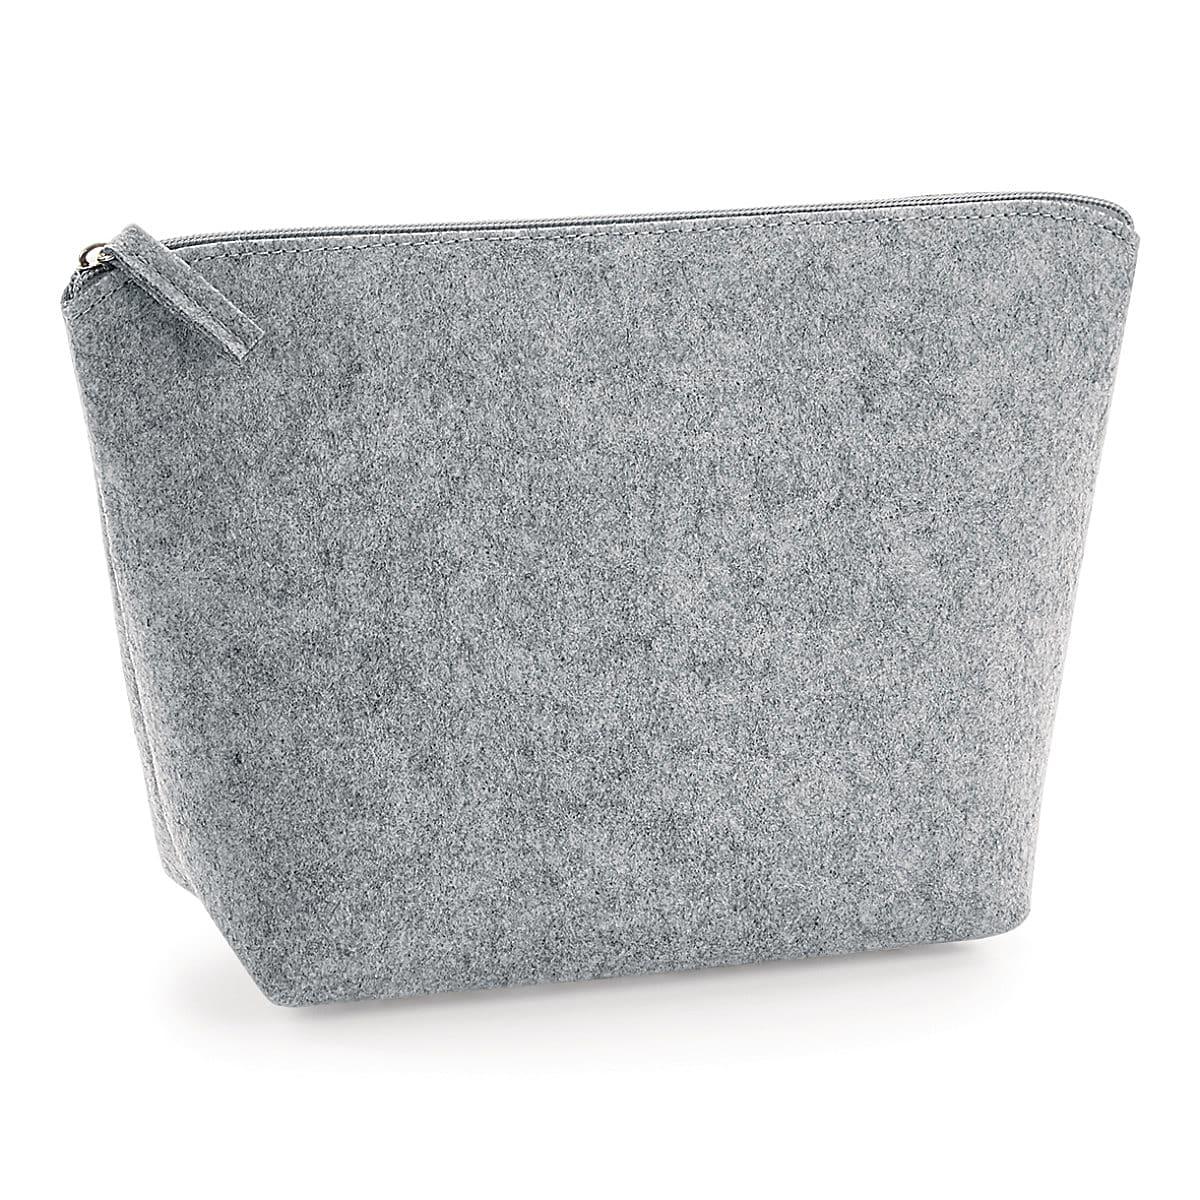 Bagbase Felt Accessory Bag in Grey Melange (Product Code: BG724)